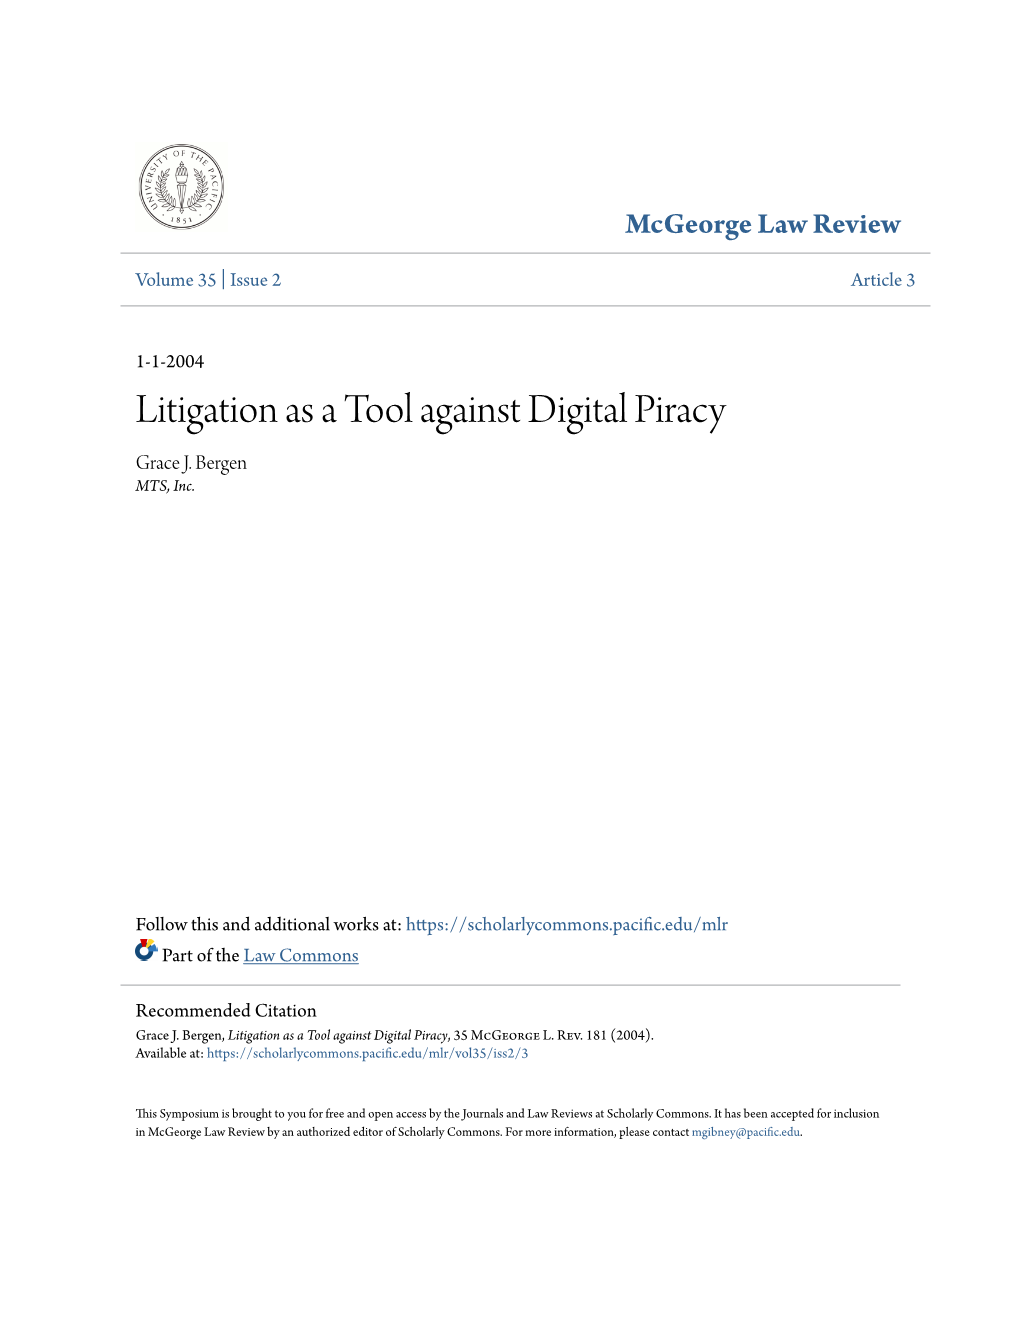 Litigation As a Tool Against Digital Piracy Grace J